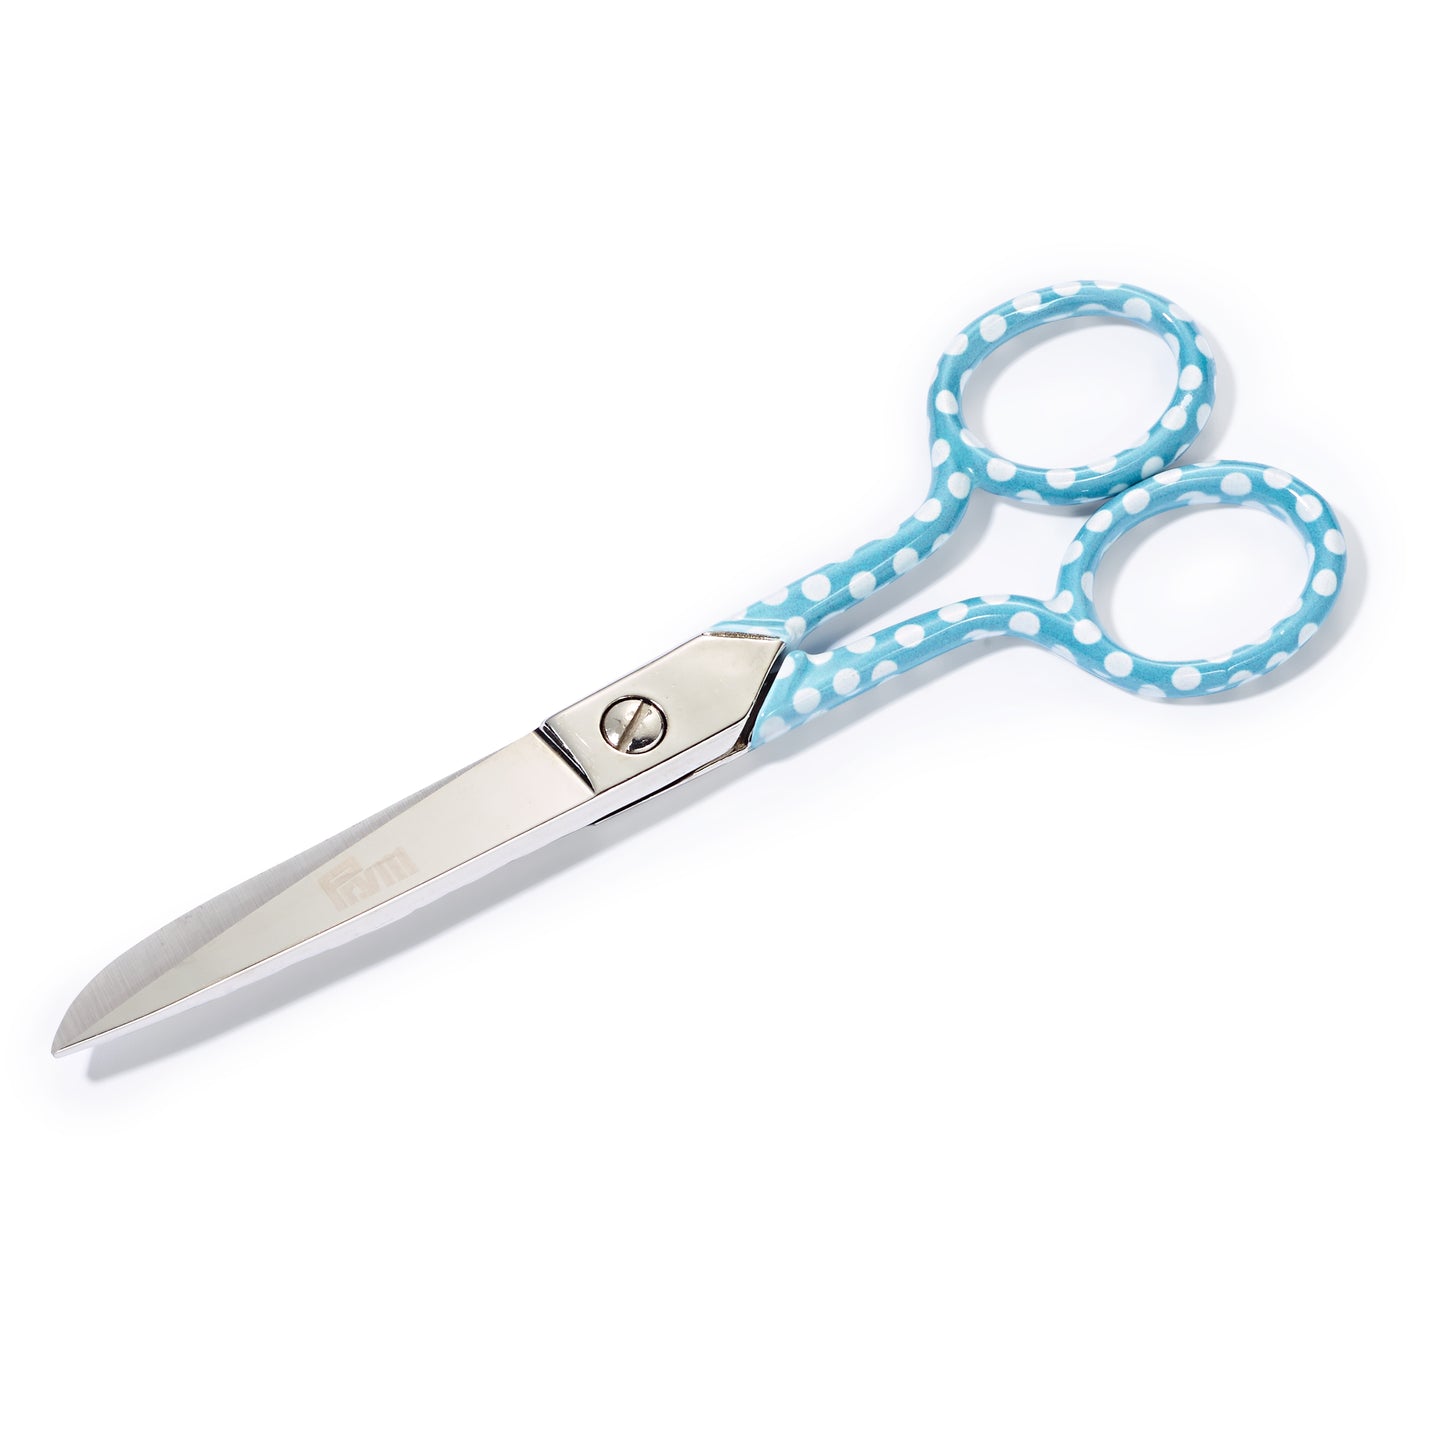 Sewing scissors 6 inch Prym Love P610541